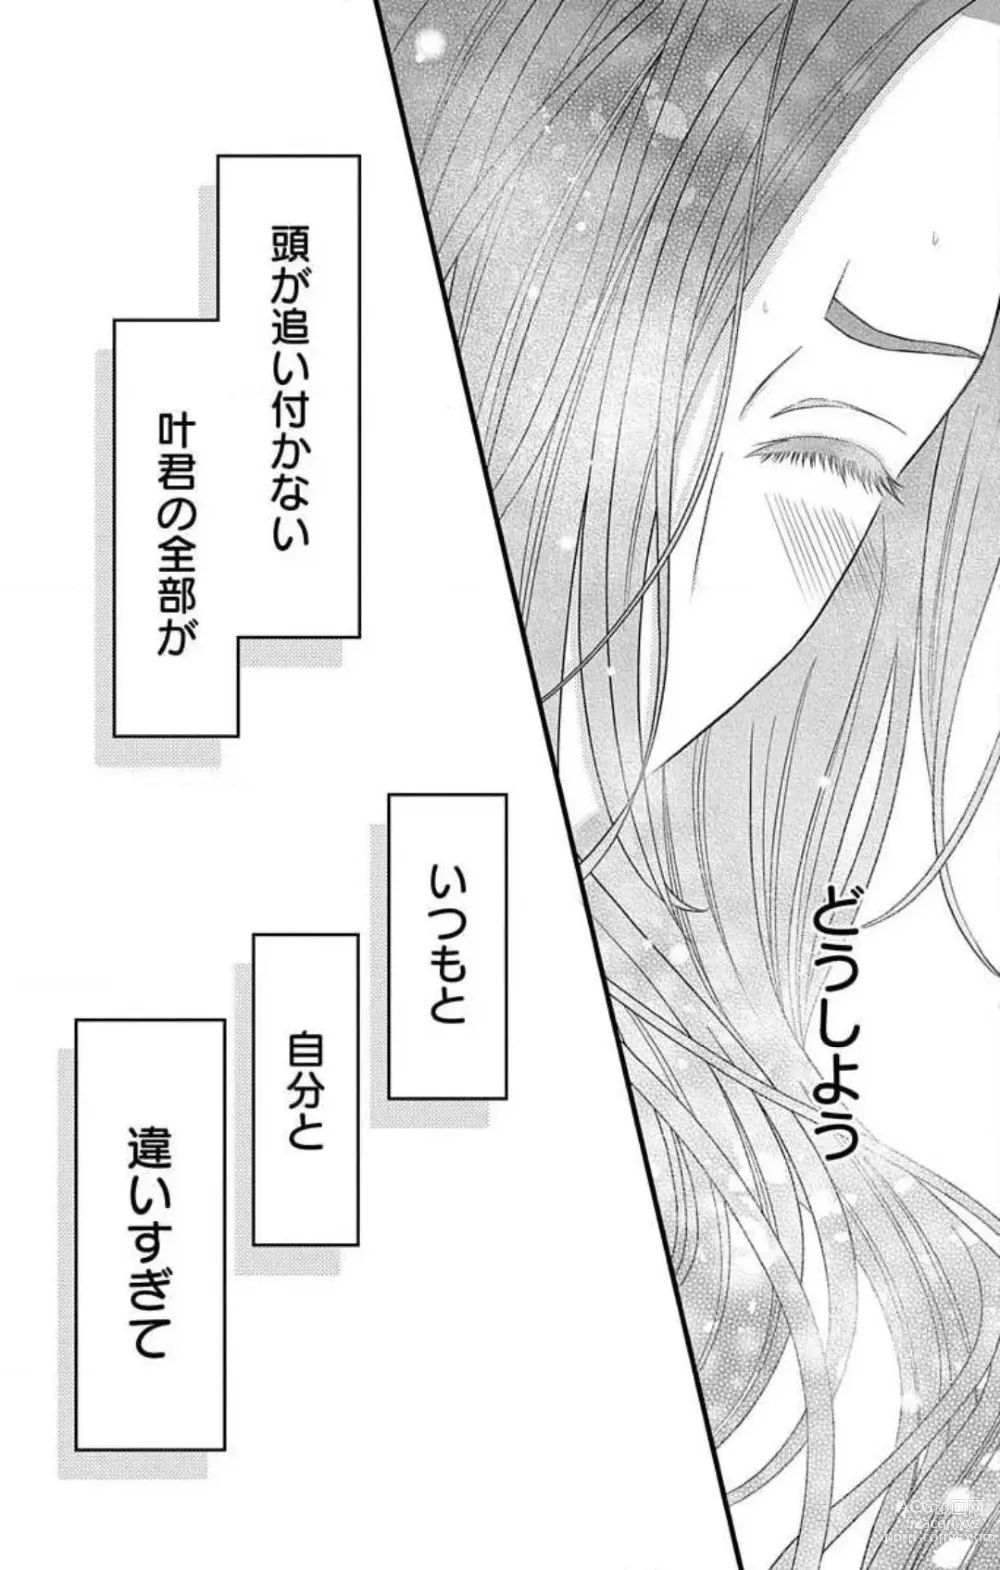 Page 9 of manga Mousou Shoujo 21-27